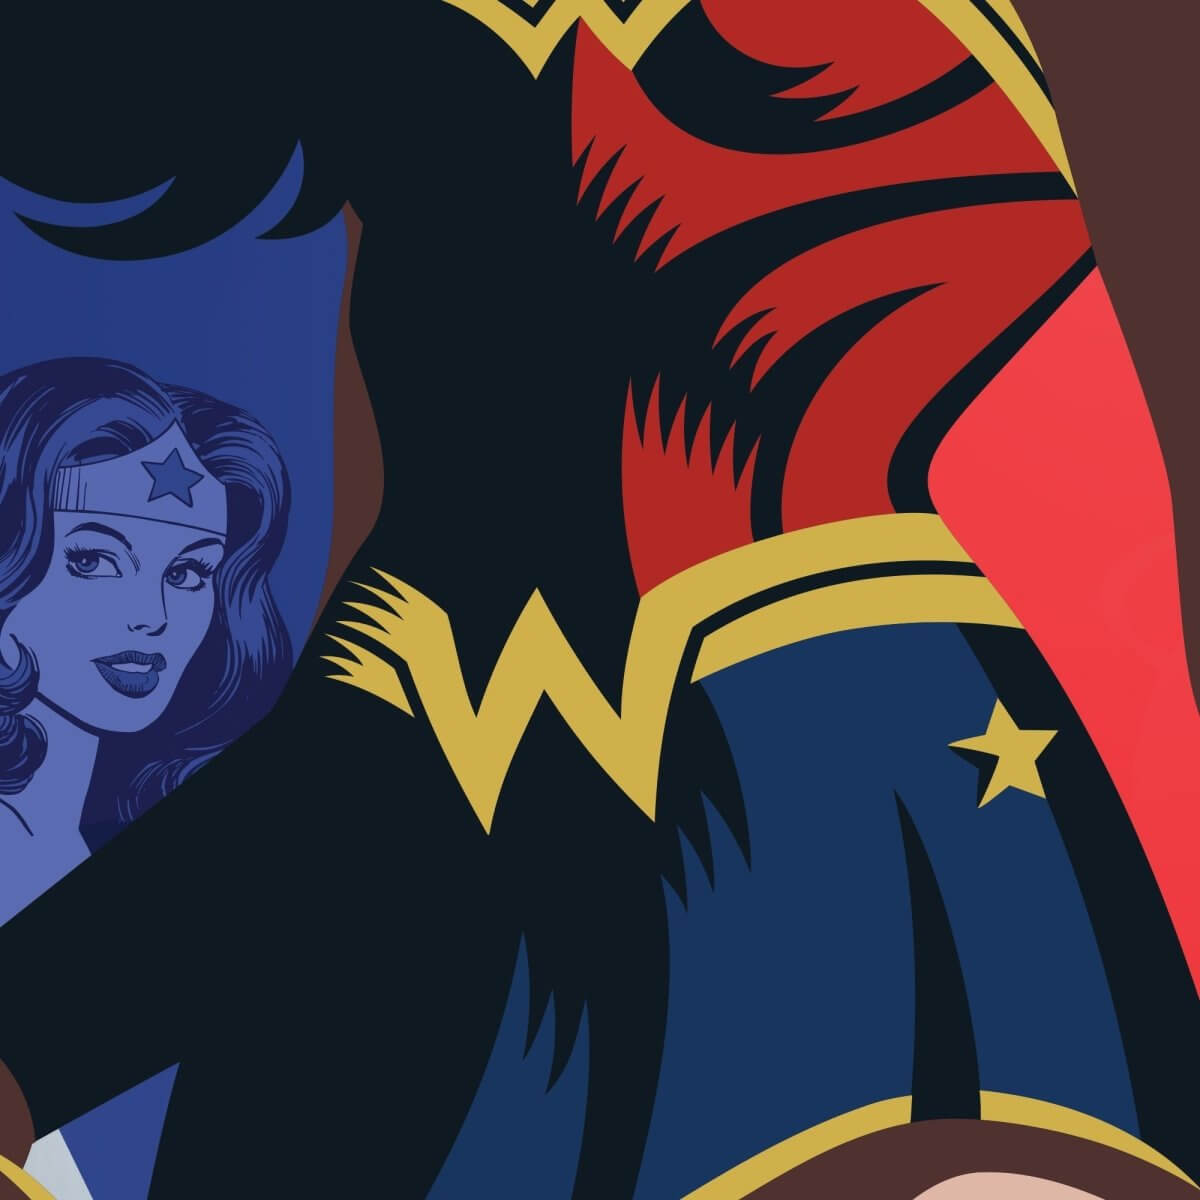 Kismet Decals Wonder Woman Believe in Wonder Officially Licensed Wall Sticker - Easy DIY DC Comics Home, Kids or Adult Bedroom, Office, Living Room Decor Wall Art - Kismet Decals